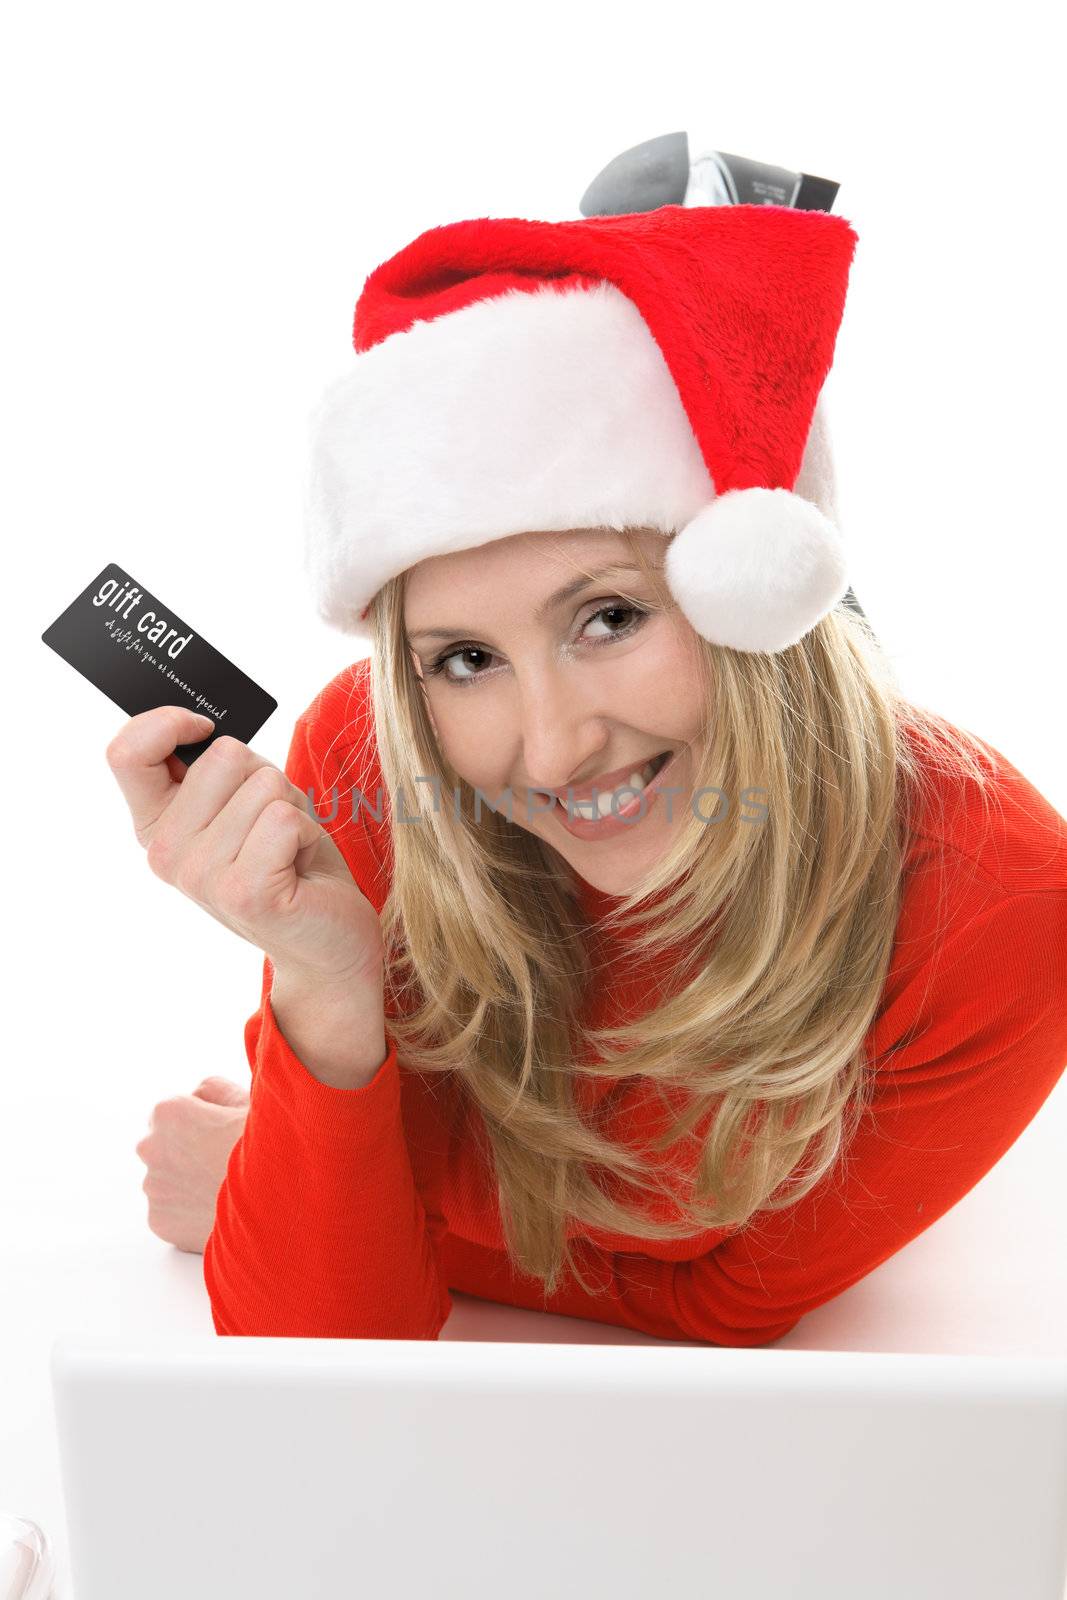 Santa Girl shopping with a card by lovleah